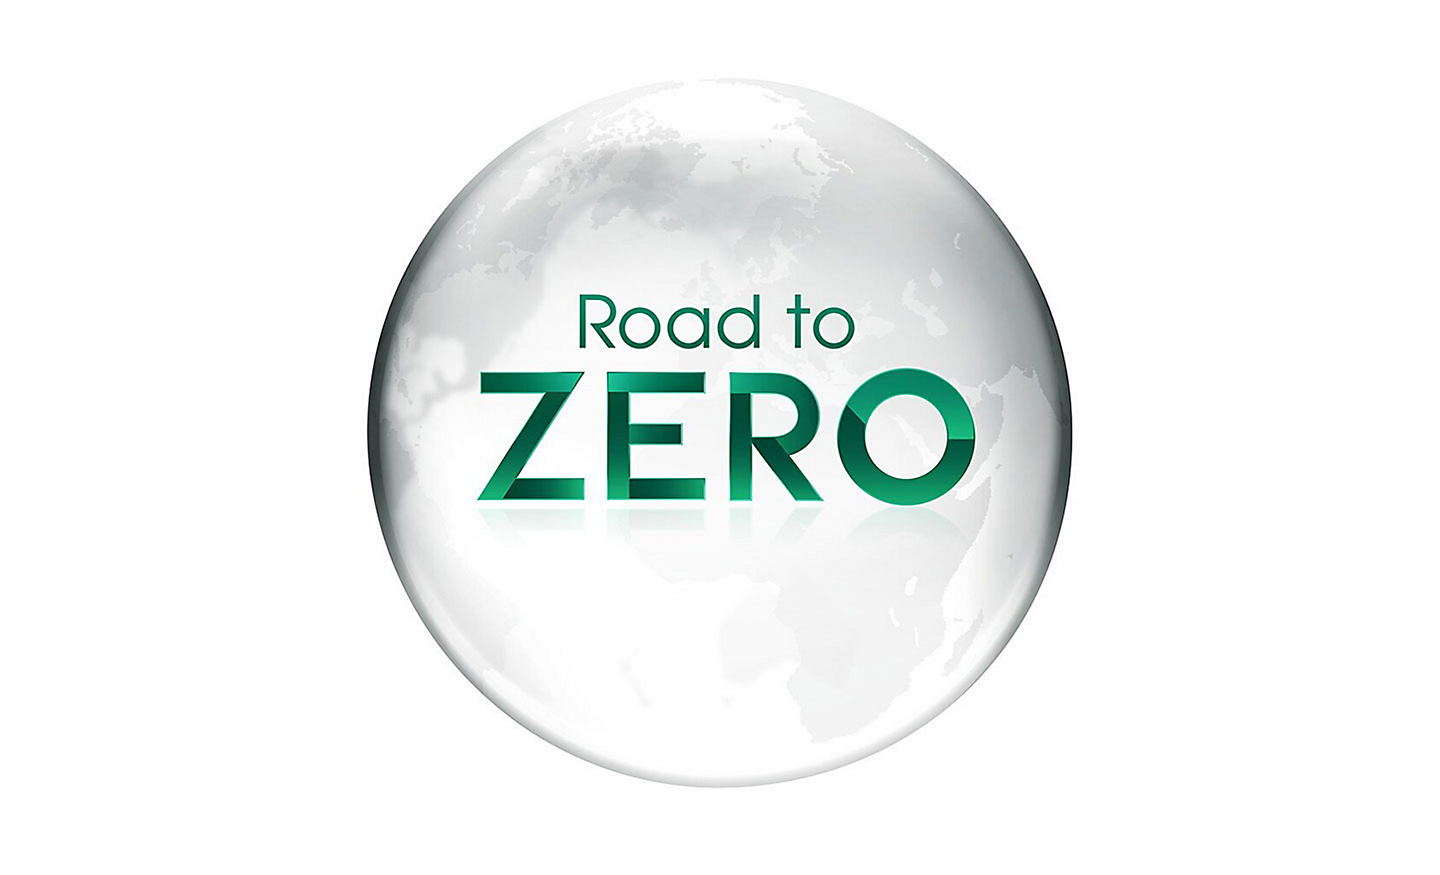 Image of the Road to Zero logo